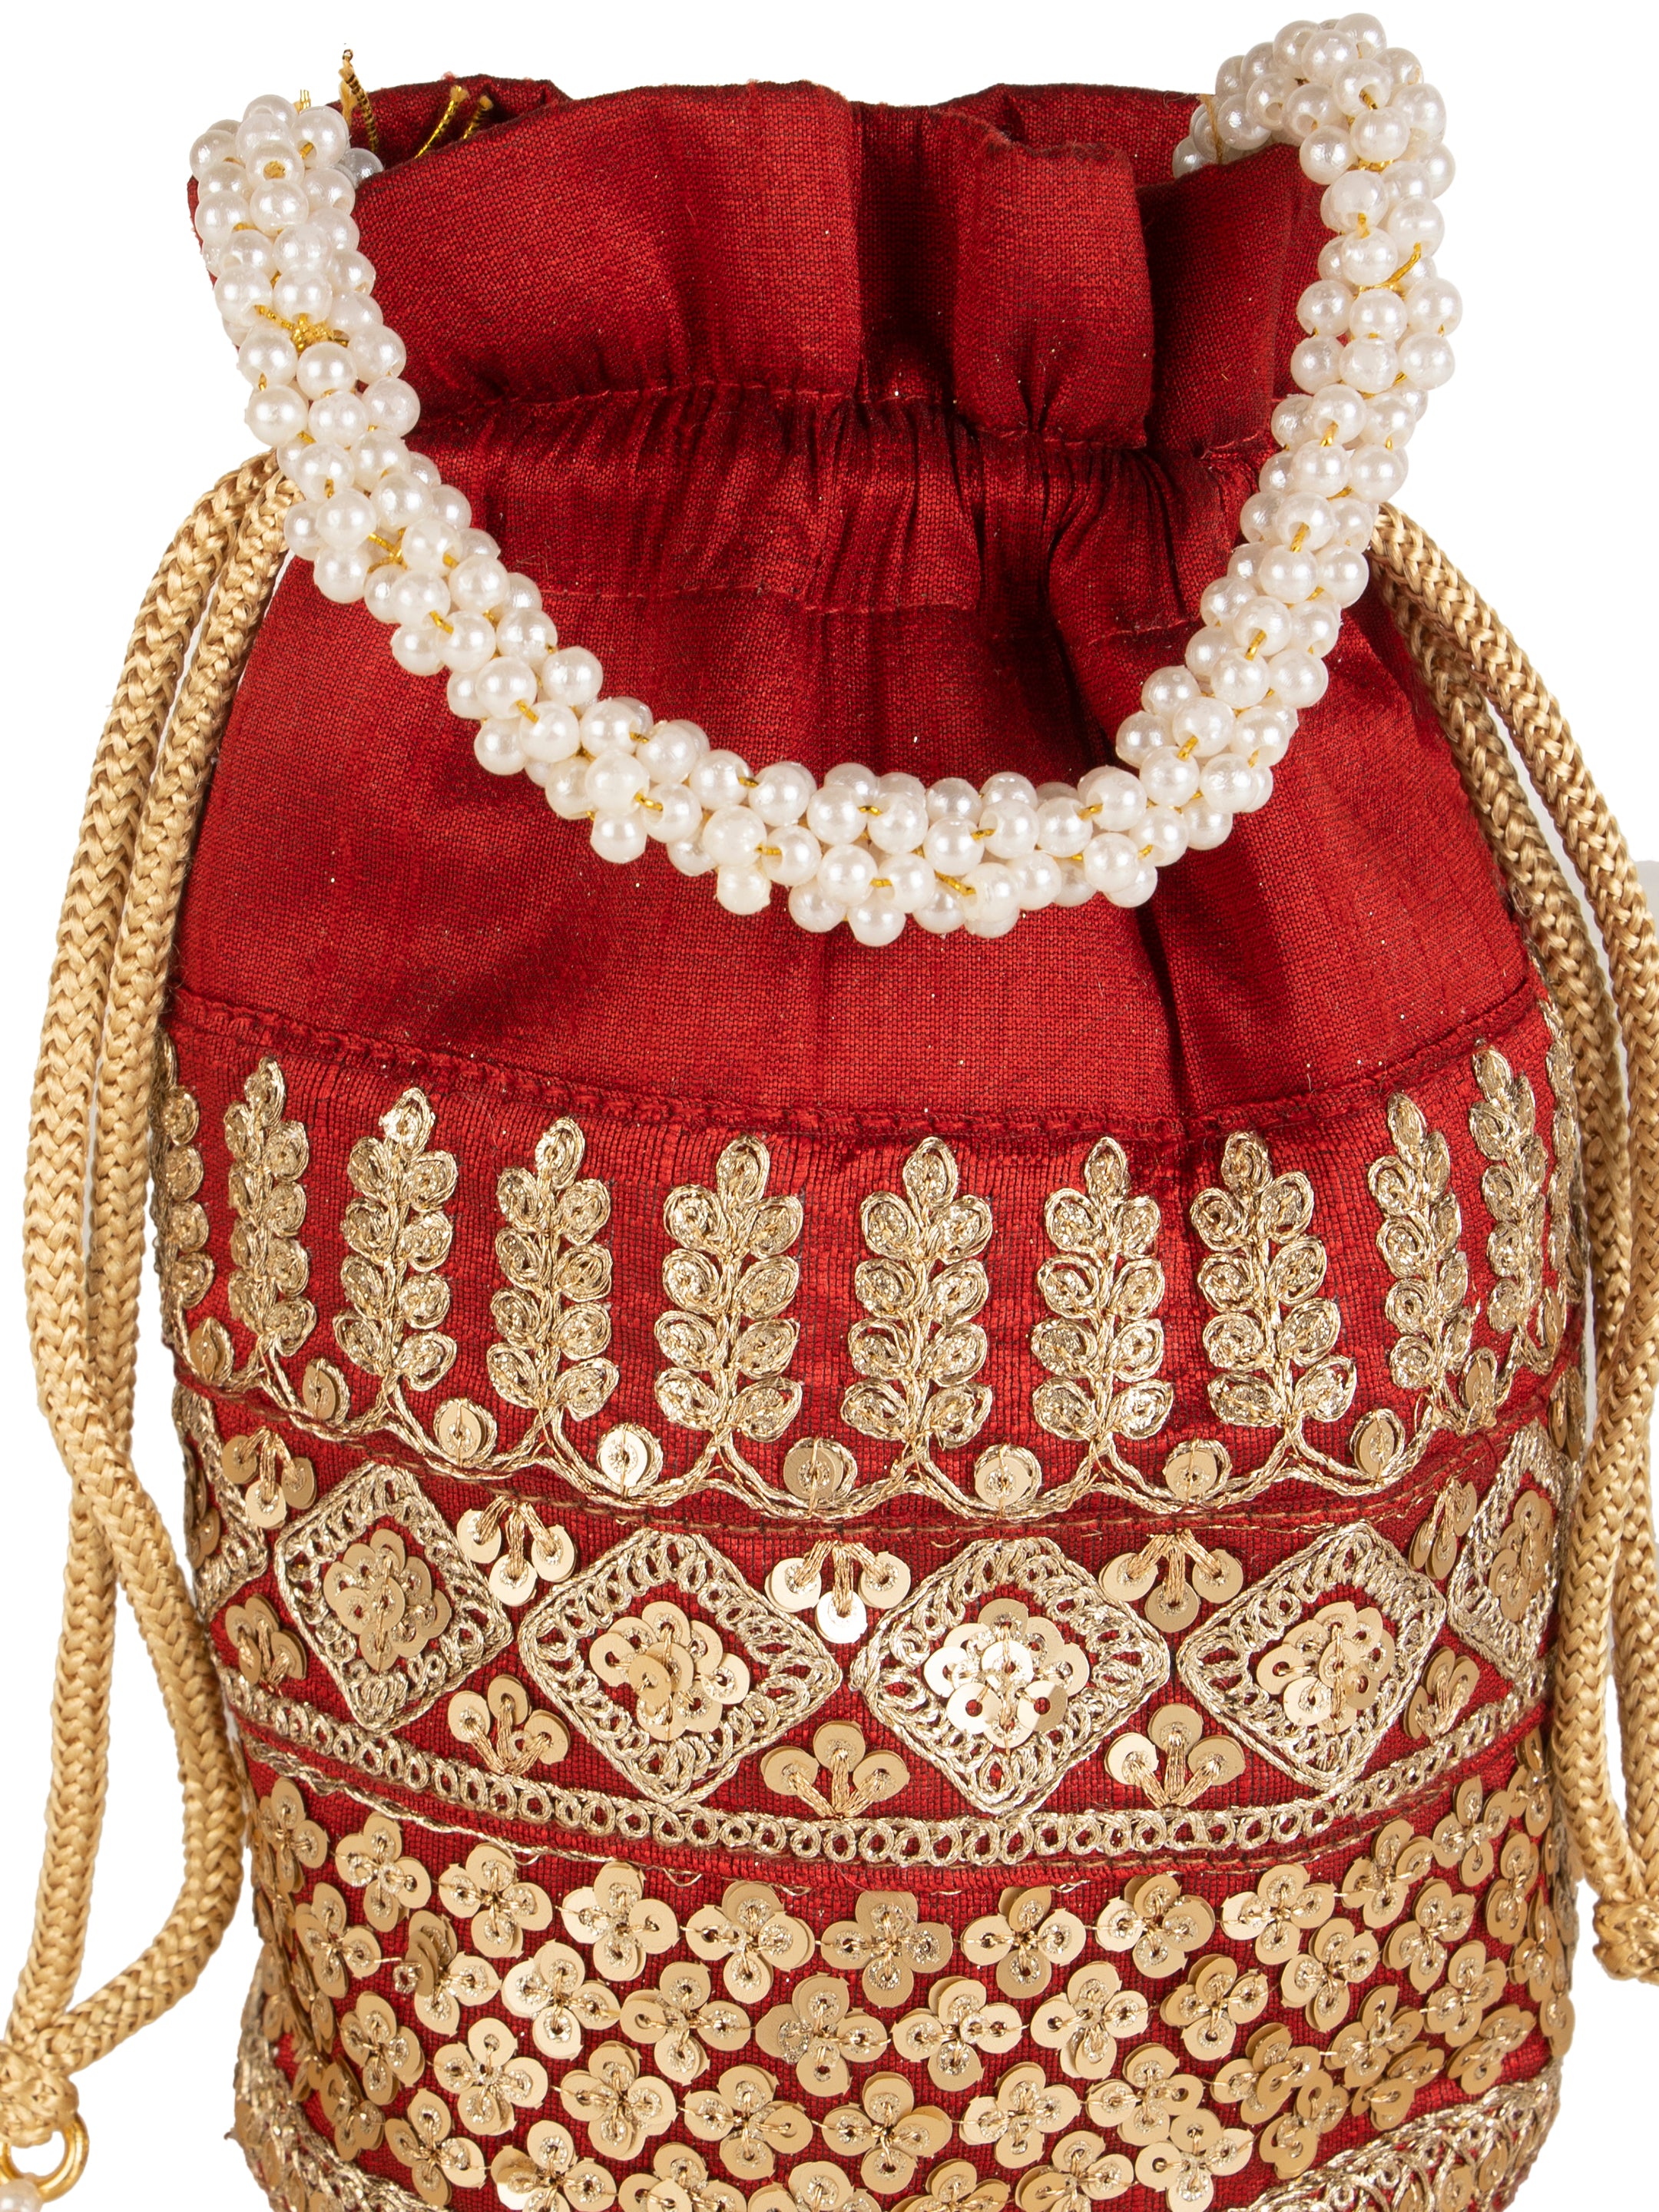 Aaribax Elegant Indian Potli Bag for the Stylish Woman,Large 10x10 Clutch  with Handle,Gold: Handbags: Amazon.com